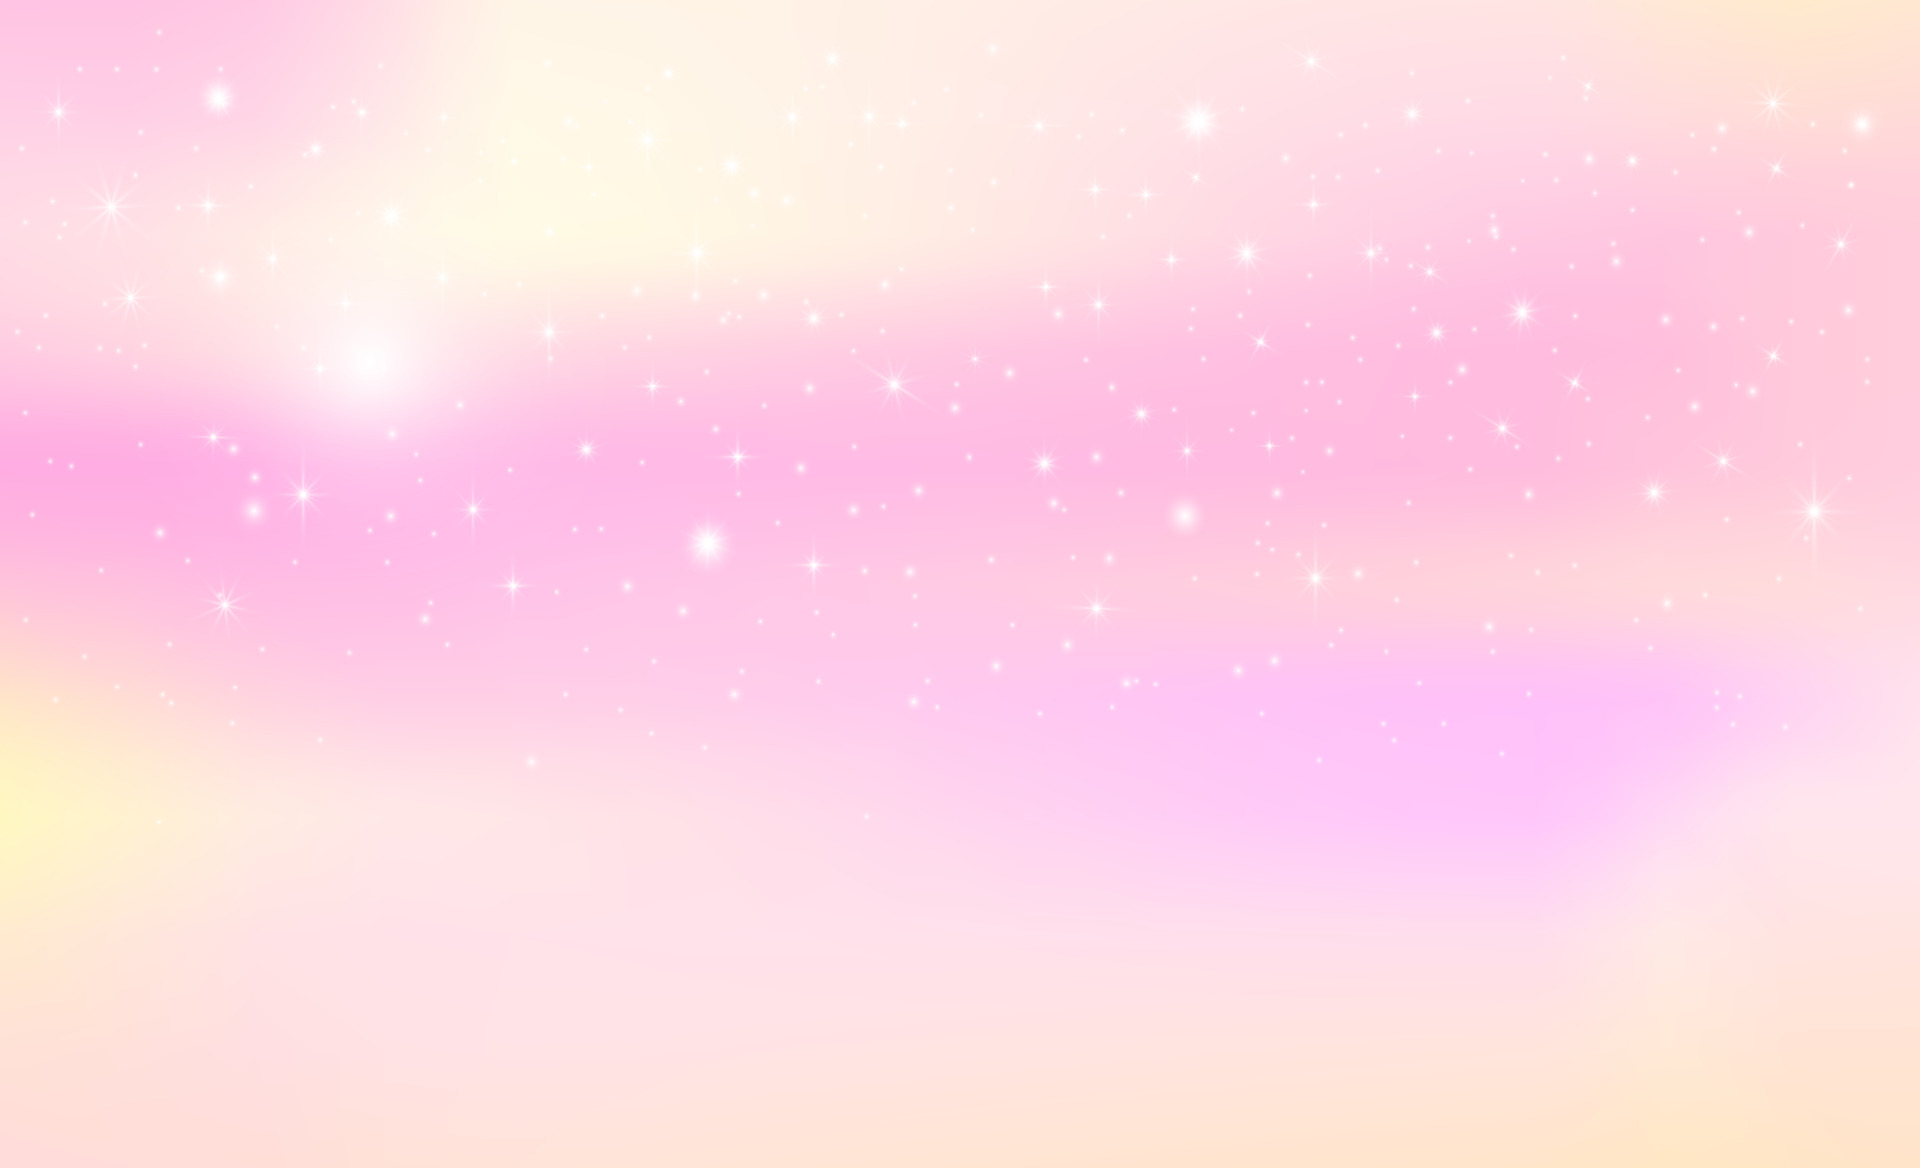 Sparkle Clipart Transparent Anime  Free Purple Sparkle Png Transparent  Background Png Download  640x4802409595  PngFind